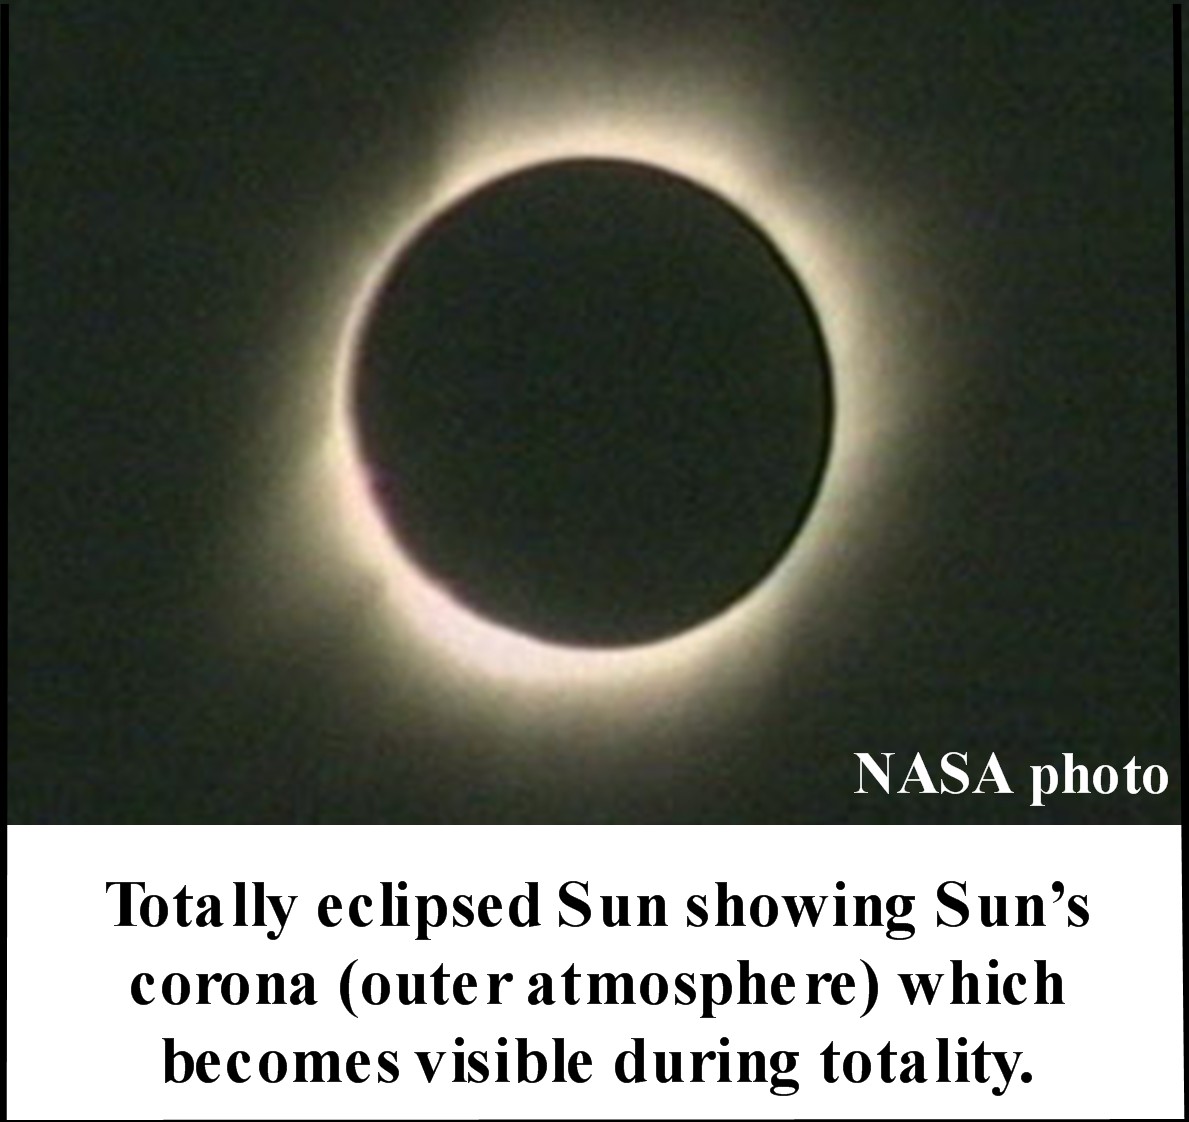 Eclipsed Sun showing corona -- NASA photo